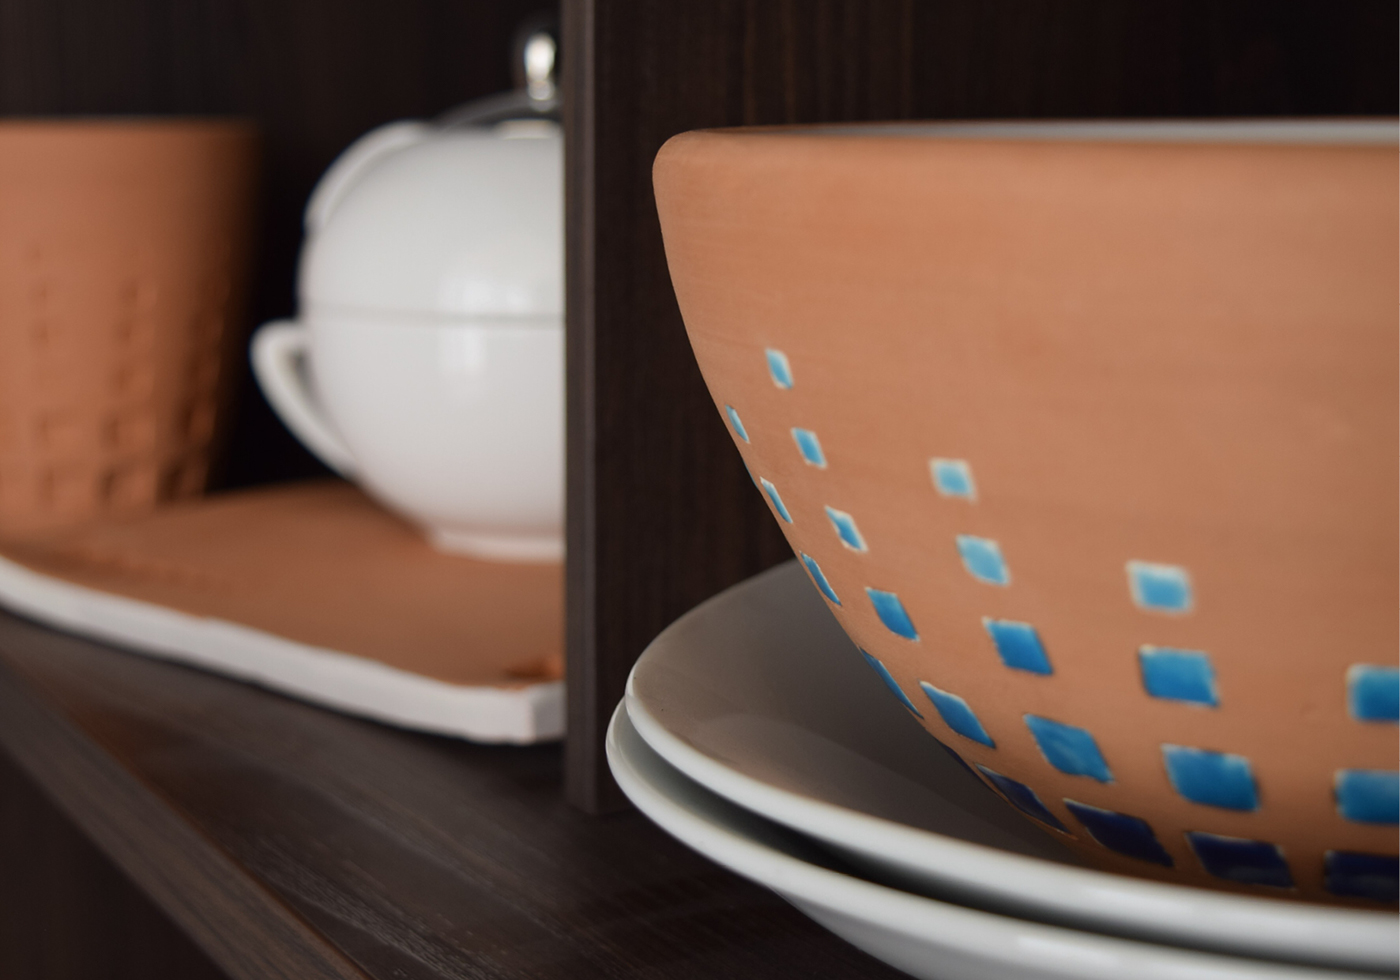 ceramics  crafts   tableware genuinity Italy clay cup bowl